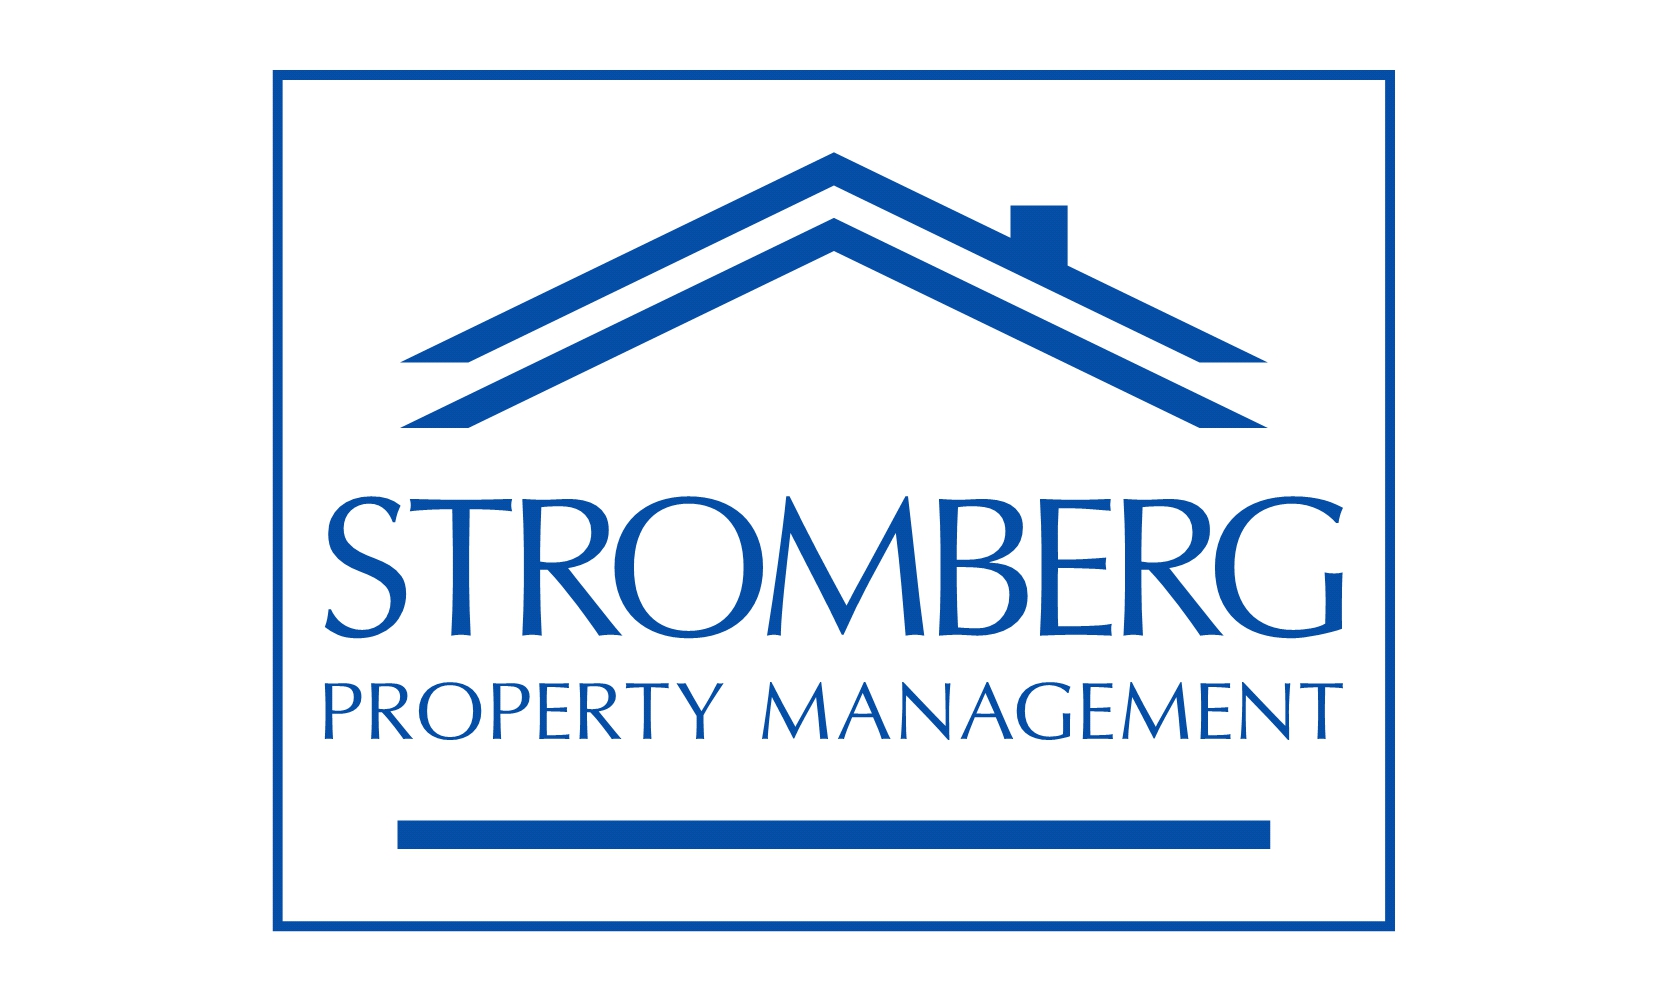 Stromberg Property Management